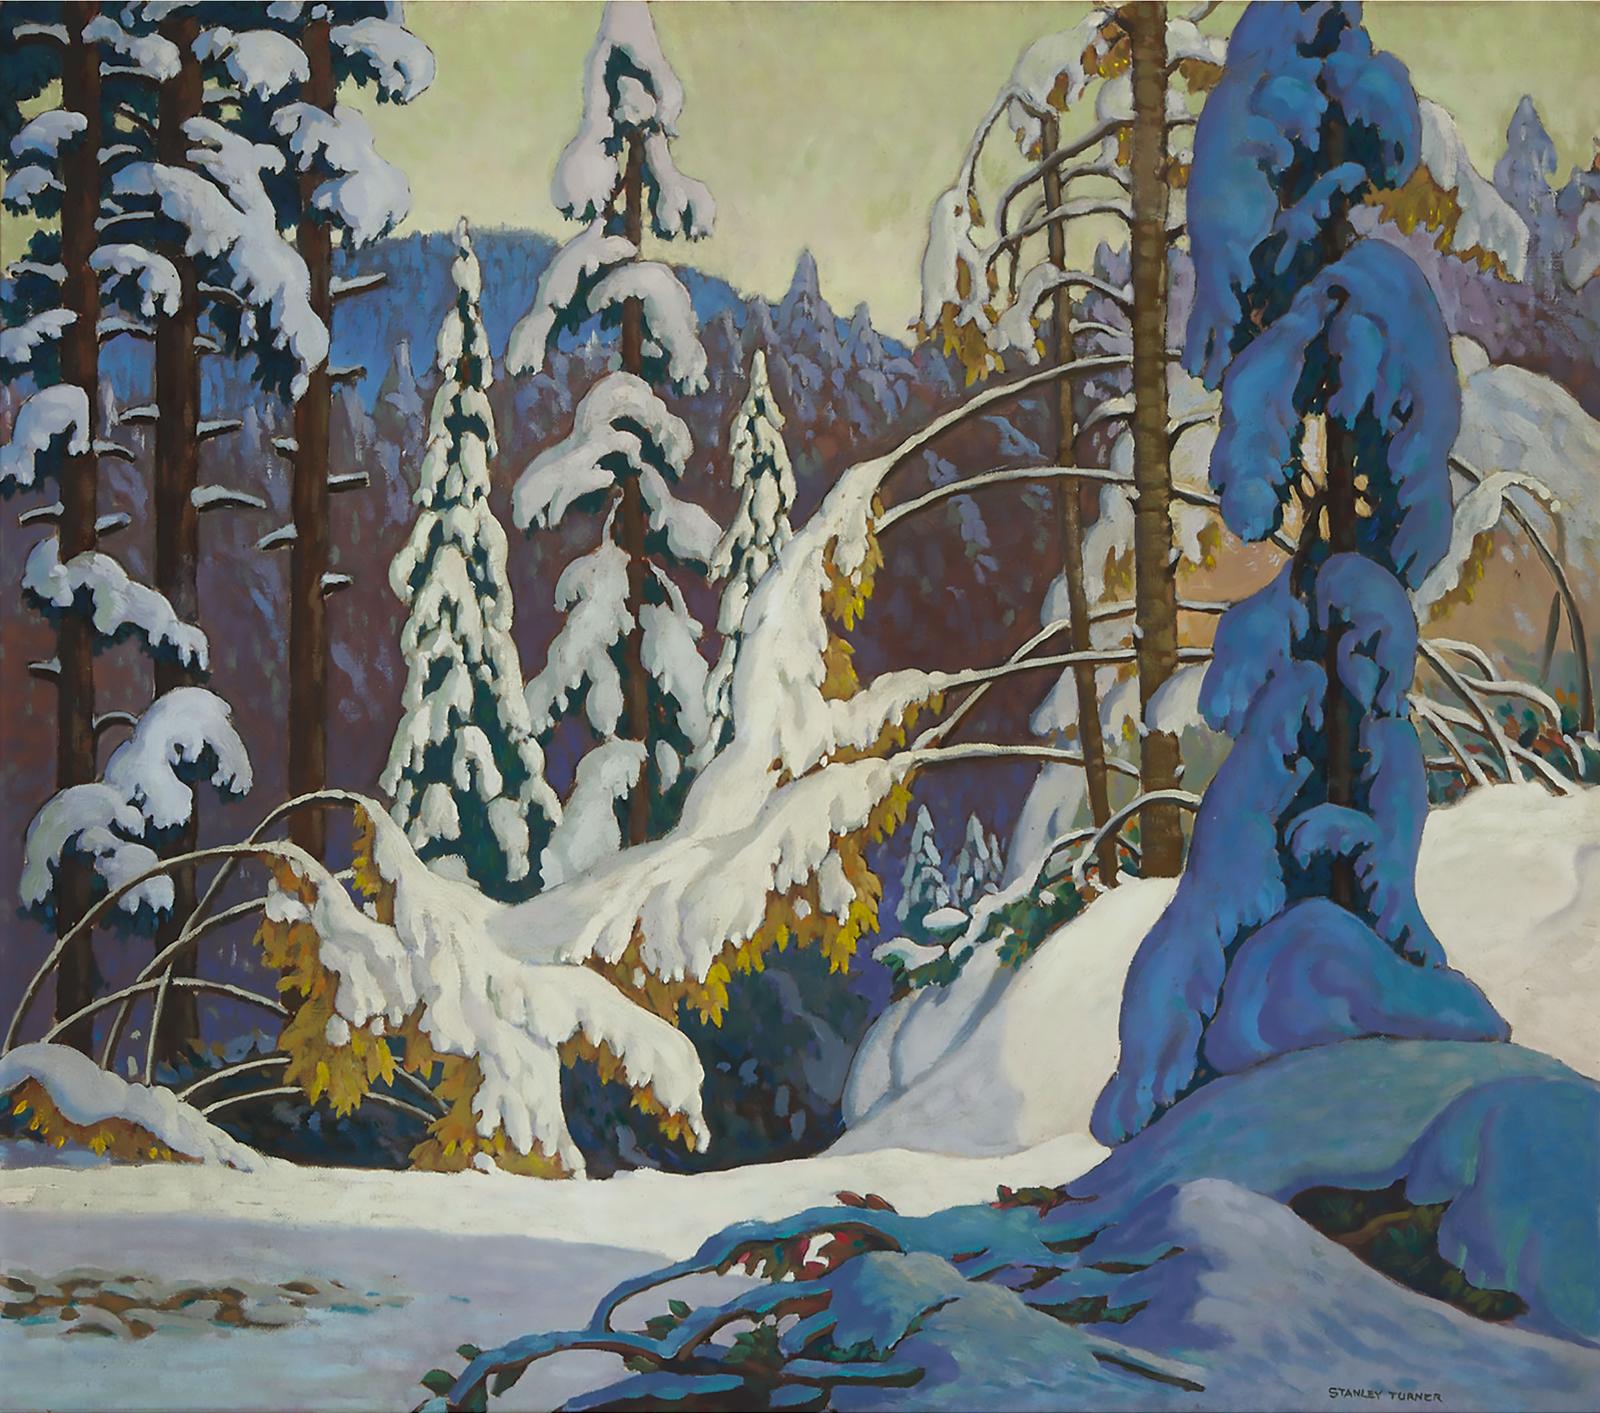 Stanley Francis Turner (1883-1953) - Heavy Snow